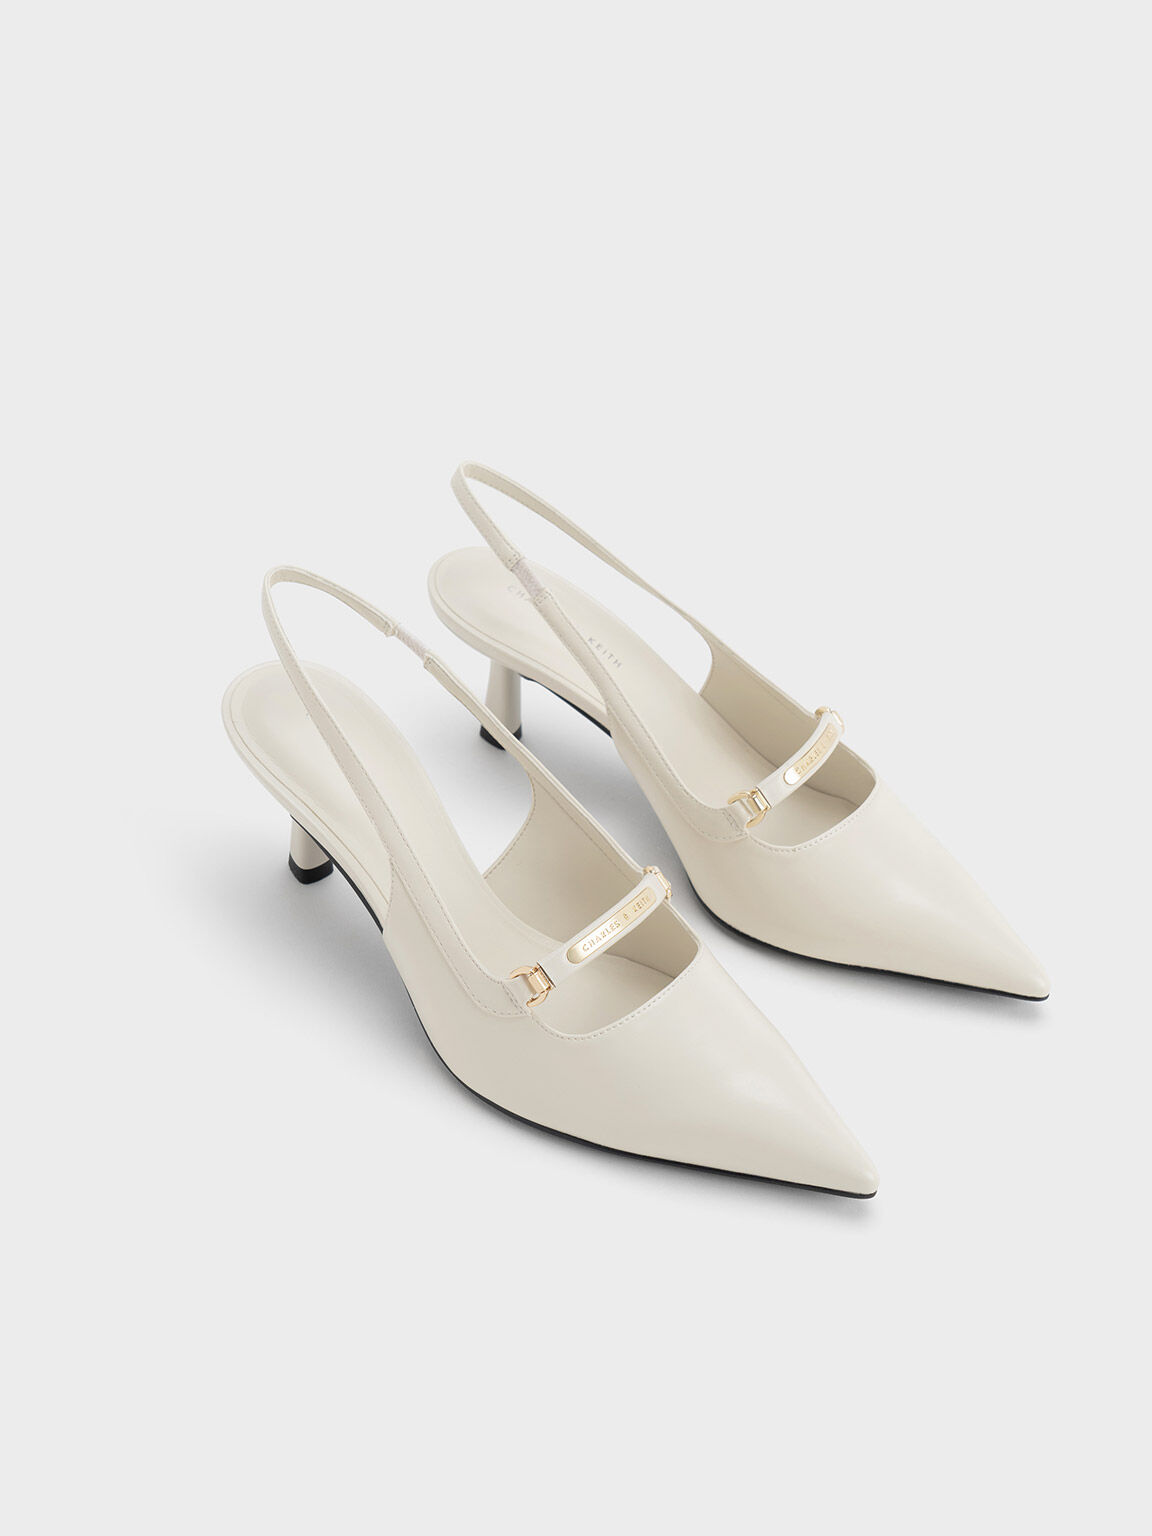 Stuart weitzman womens cream slingback heels size 9 | eBay